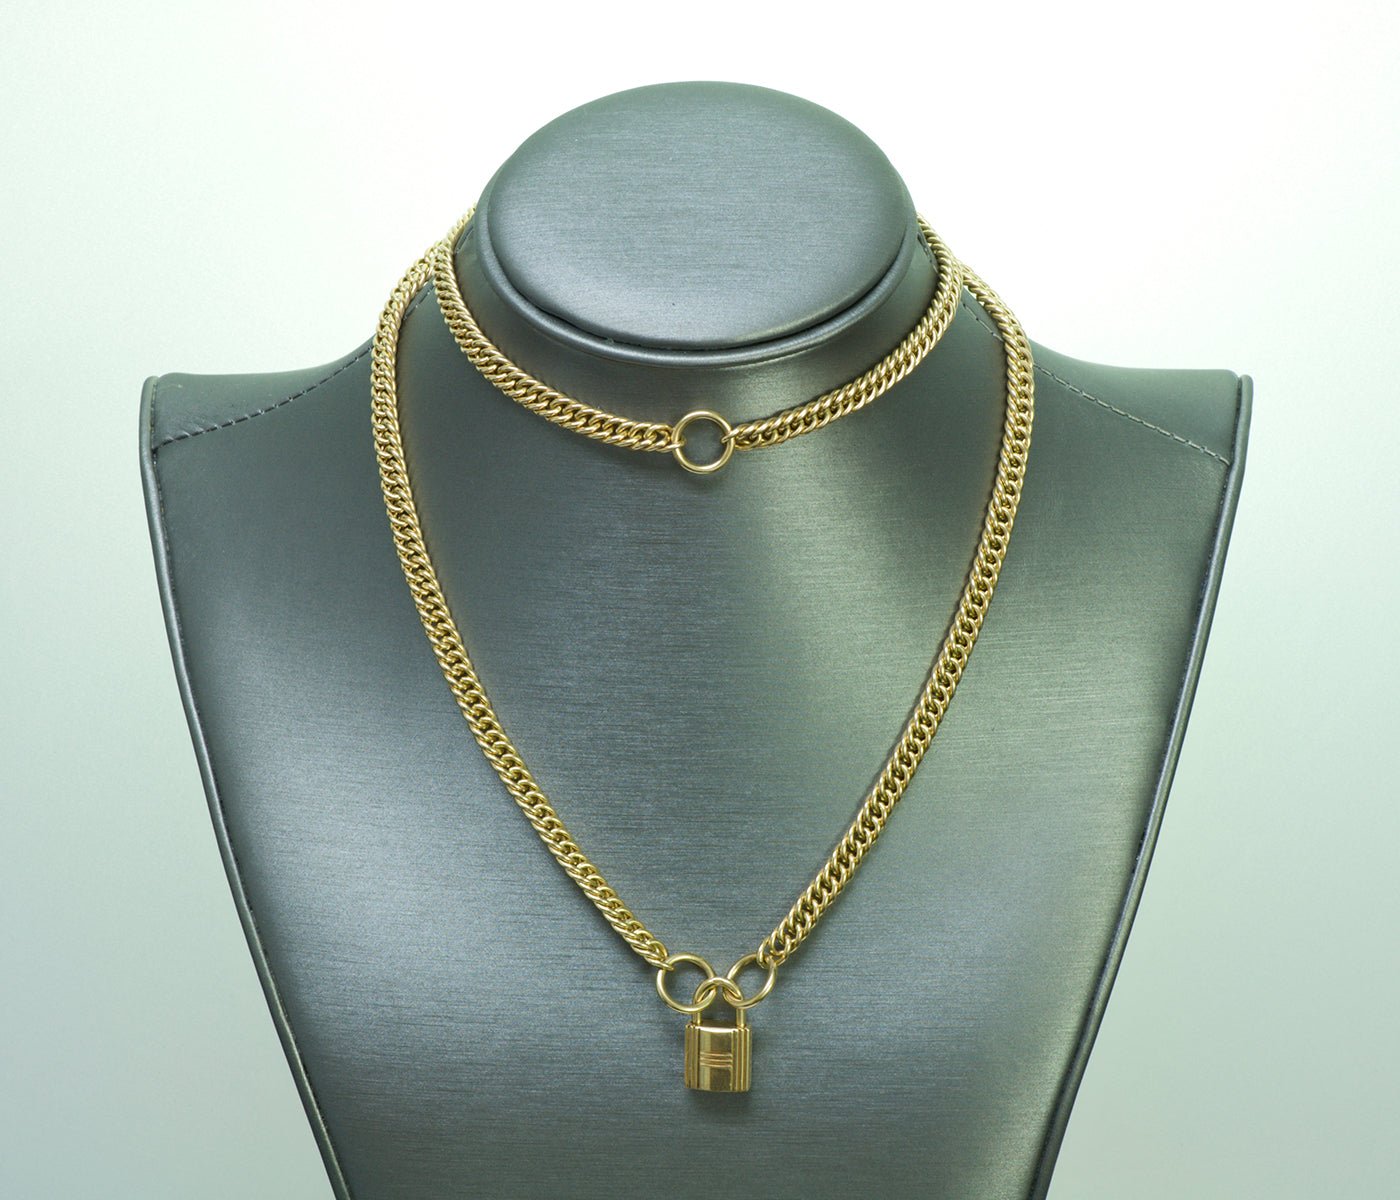 Hermès 18K Gold Padlock Chain Necklace